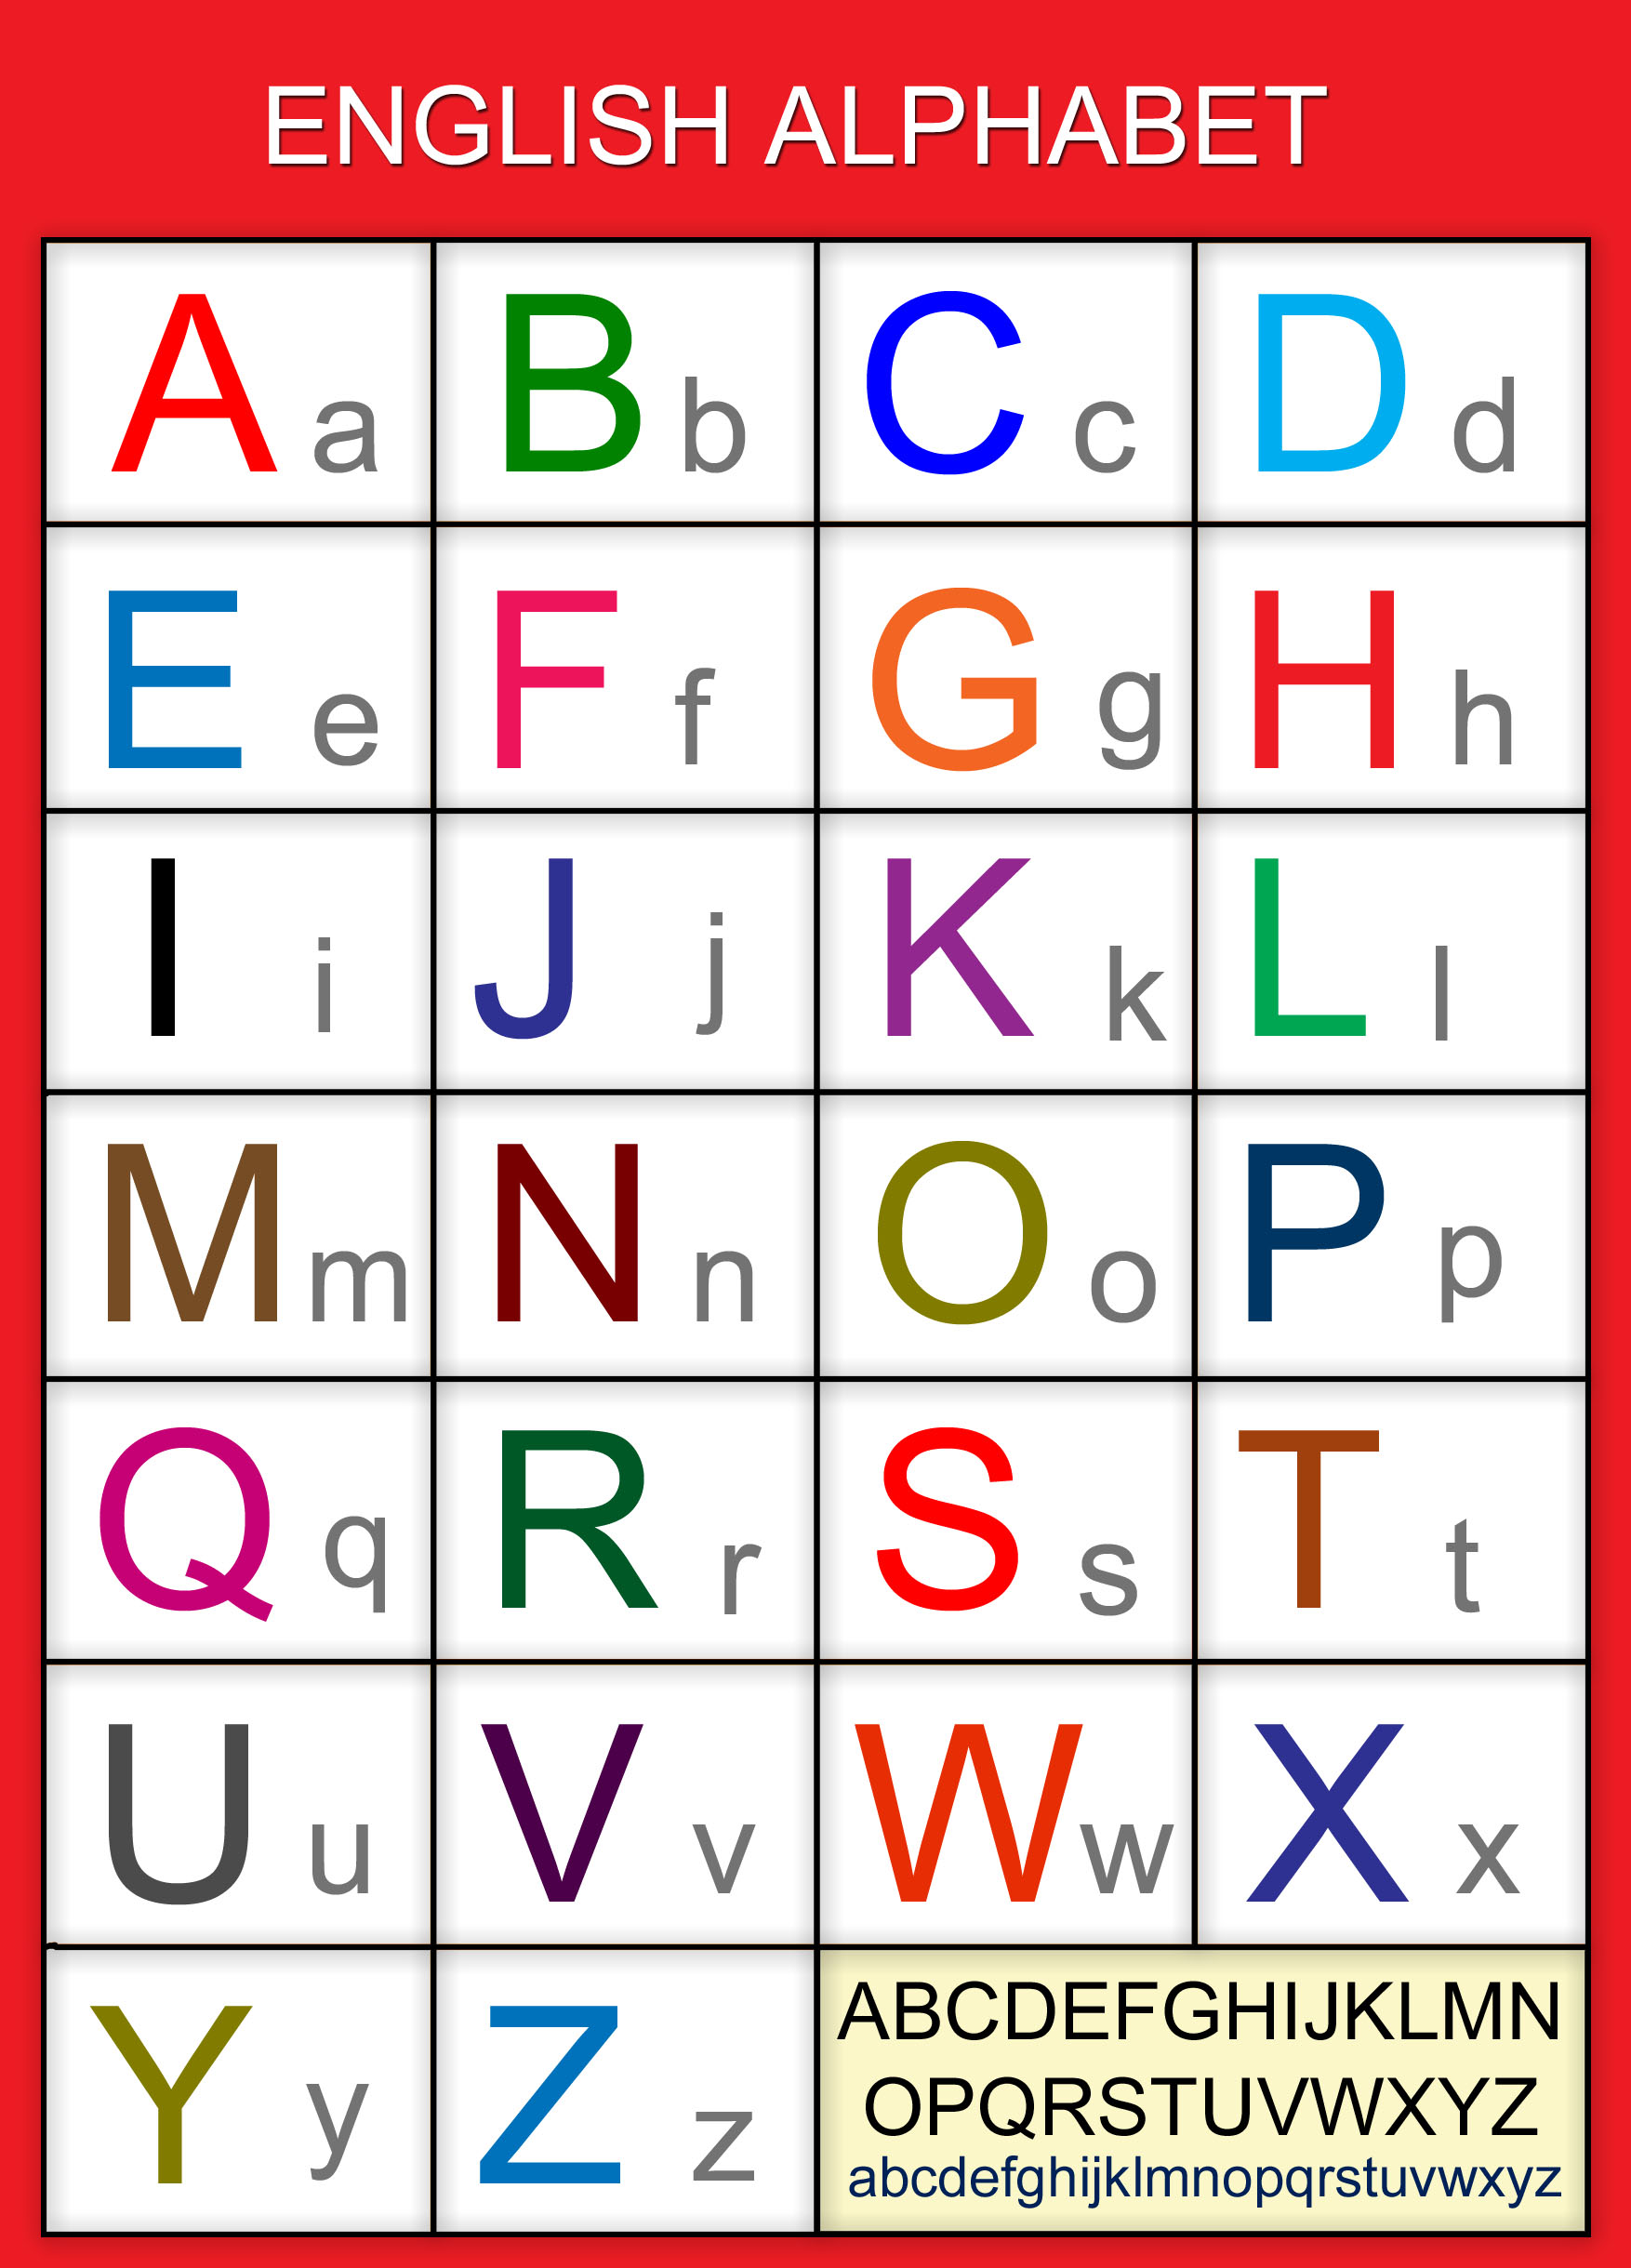 abcd chart english alphabet chart